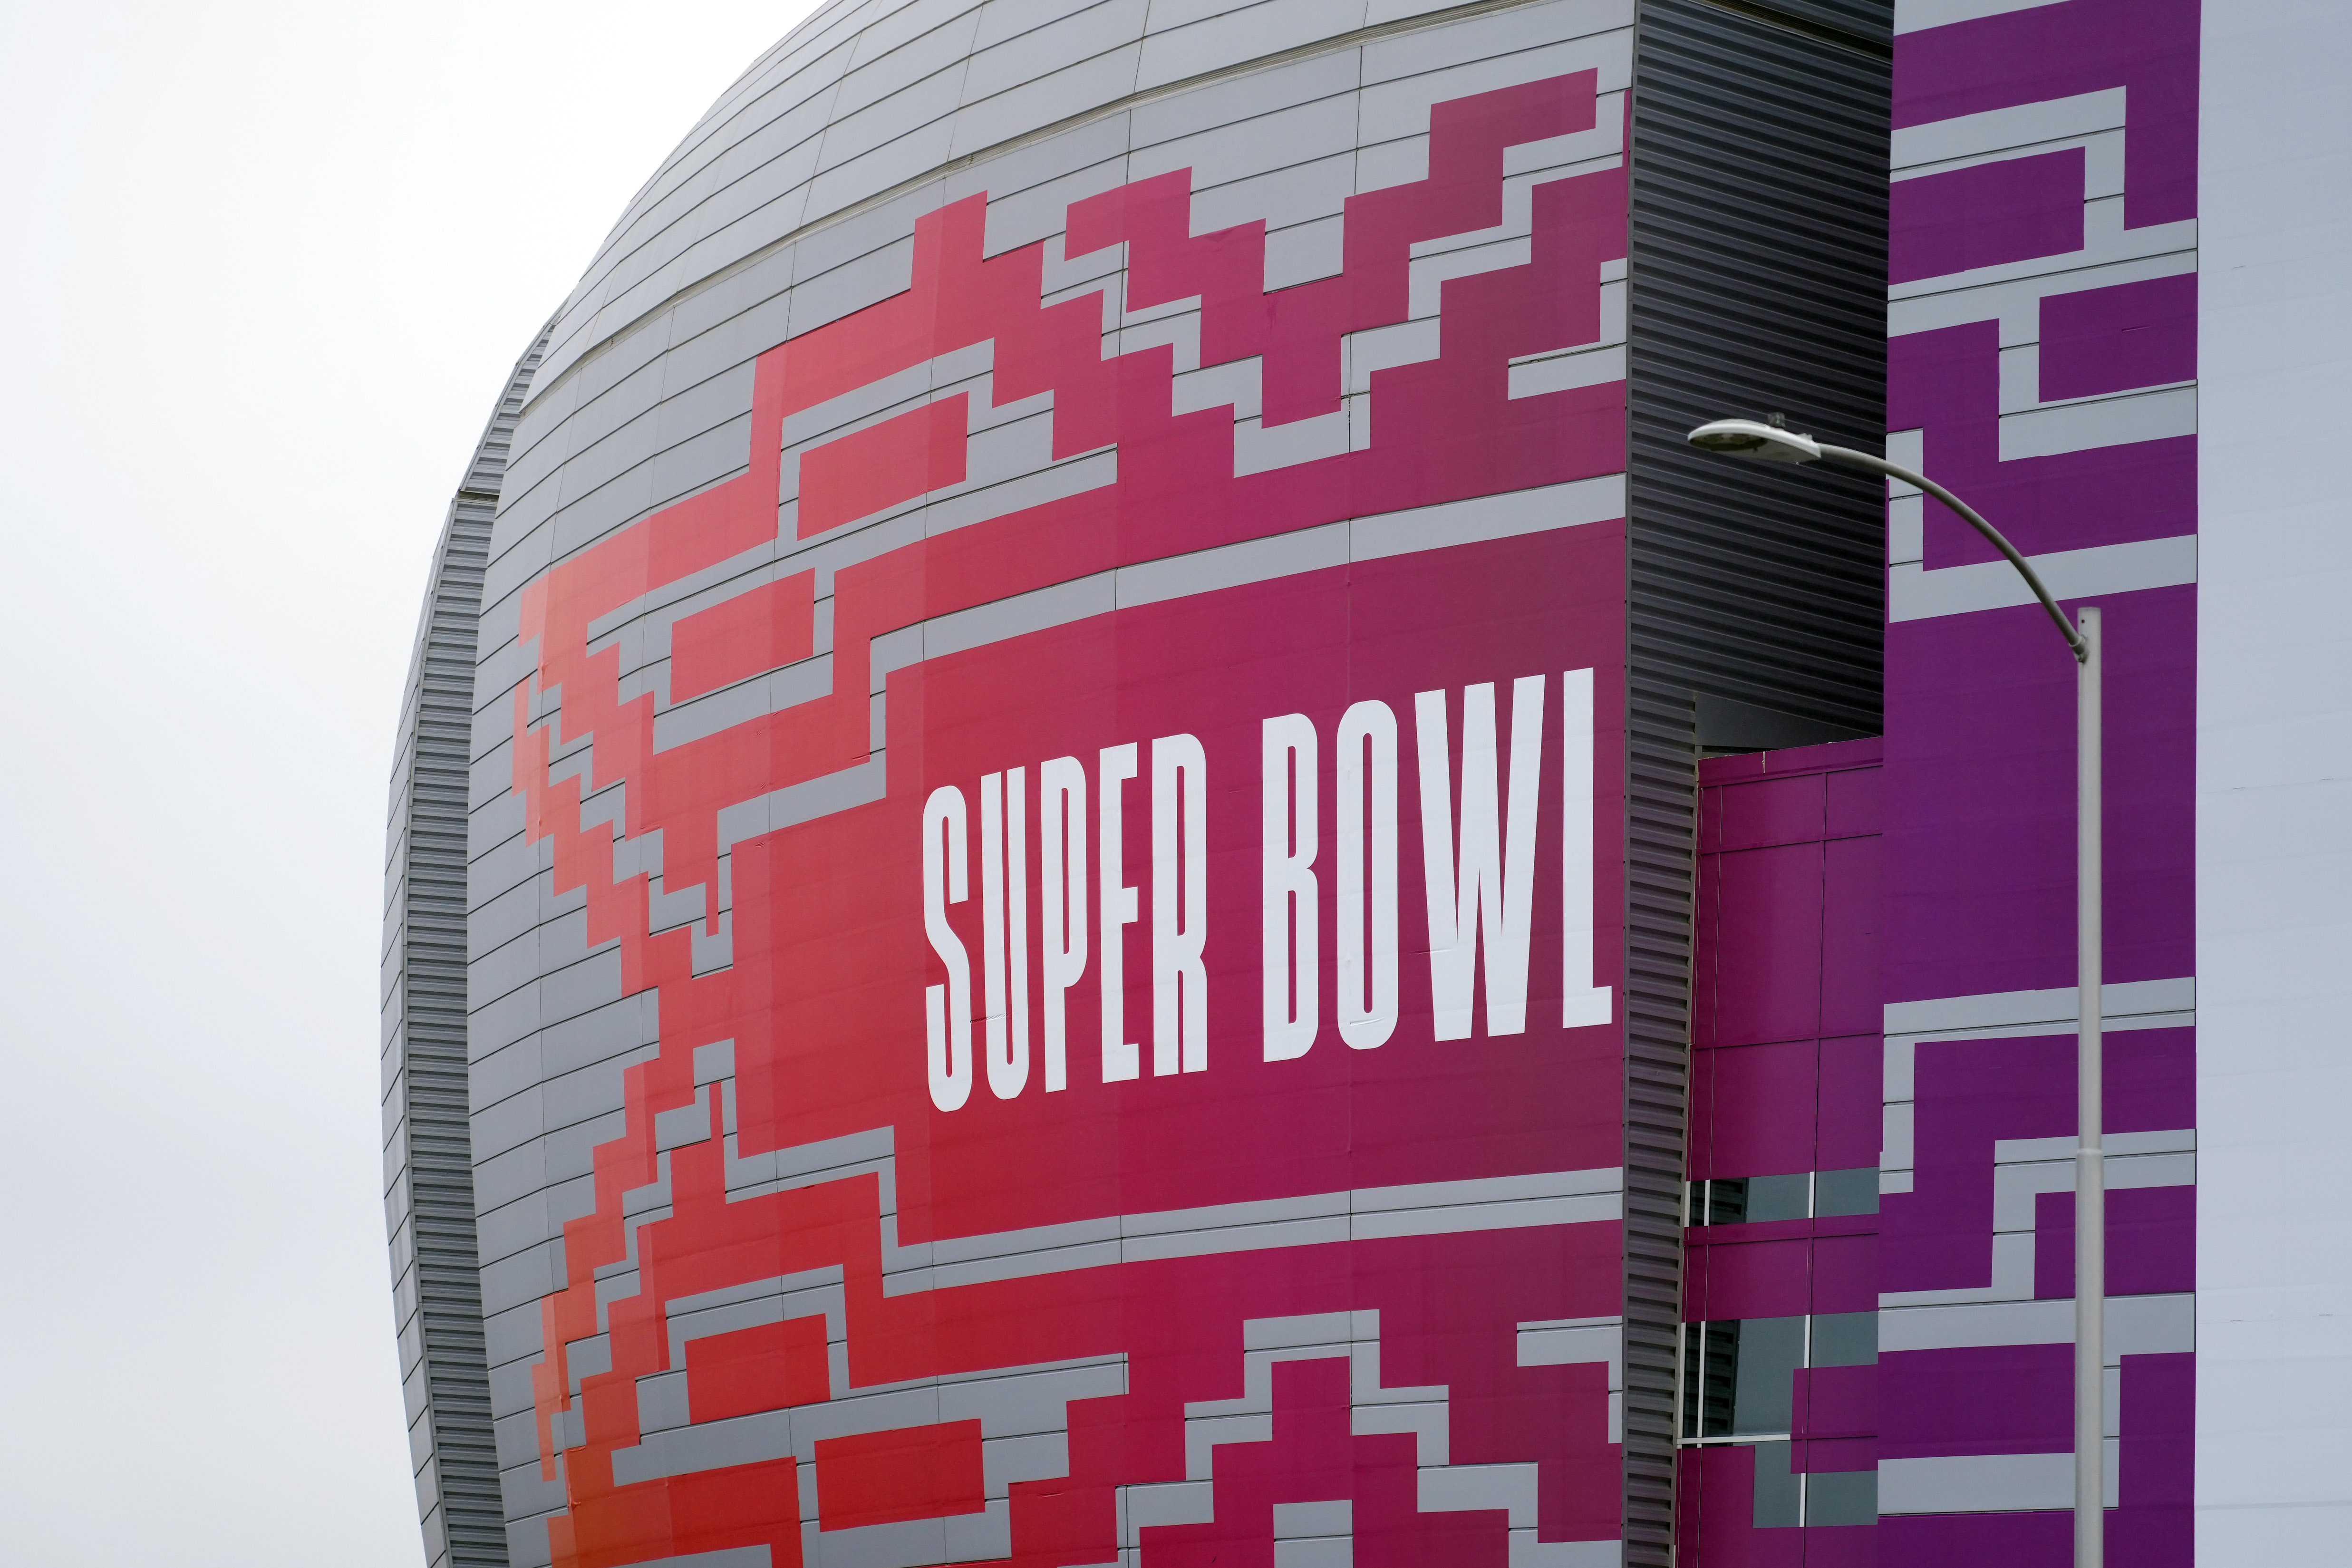 NFL: Super Bowl LVII-Stadium and Field Preparation Press Conference